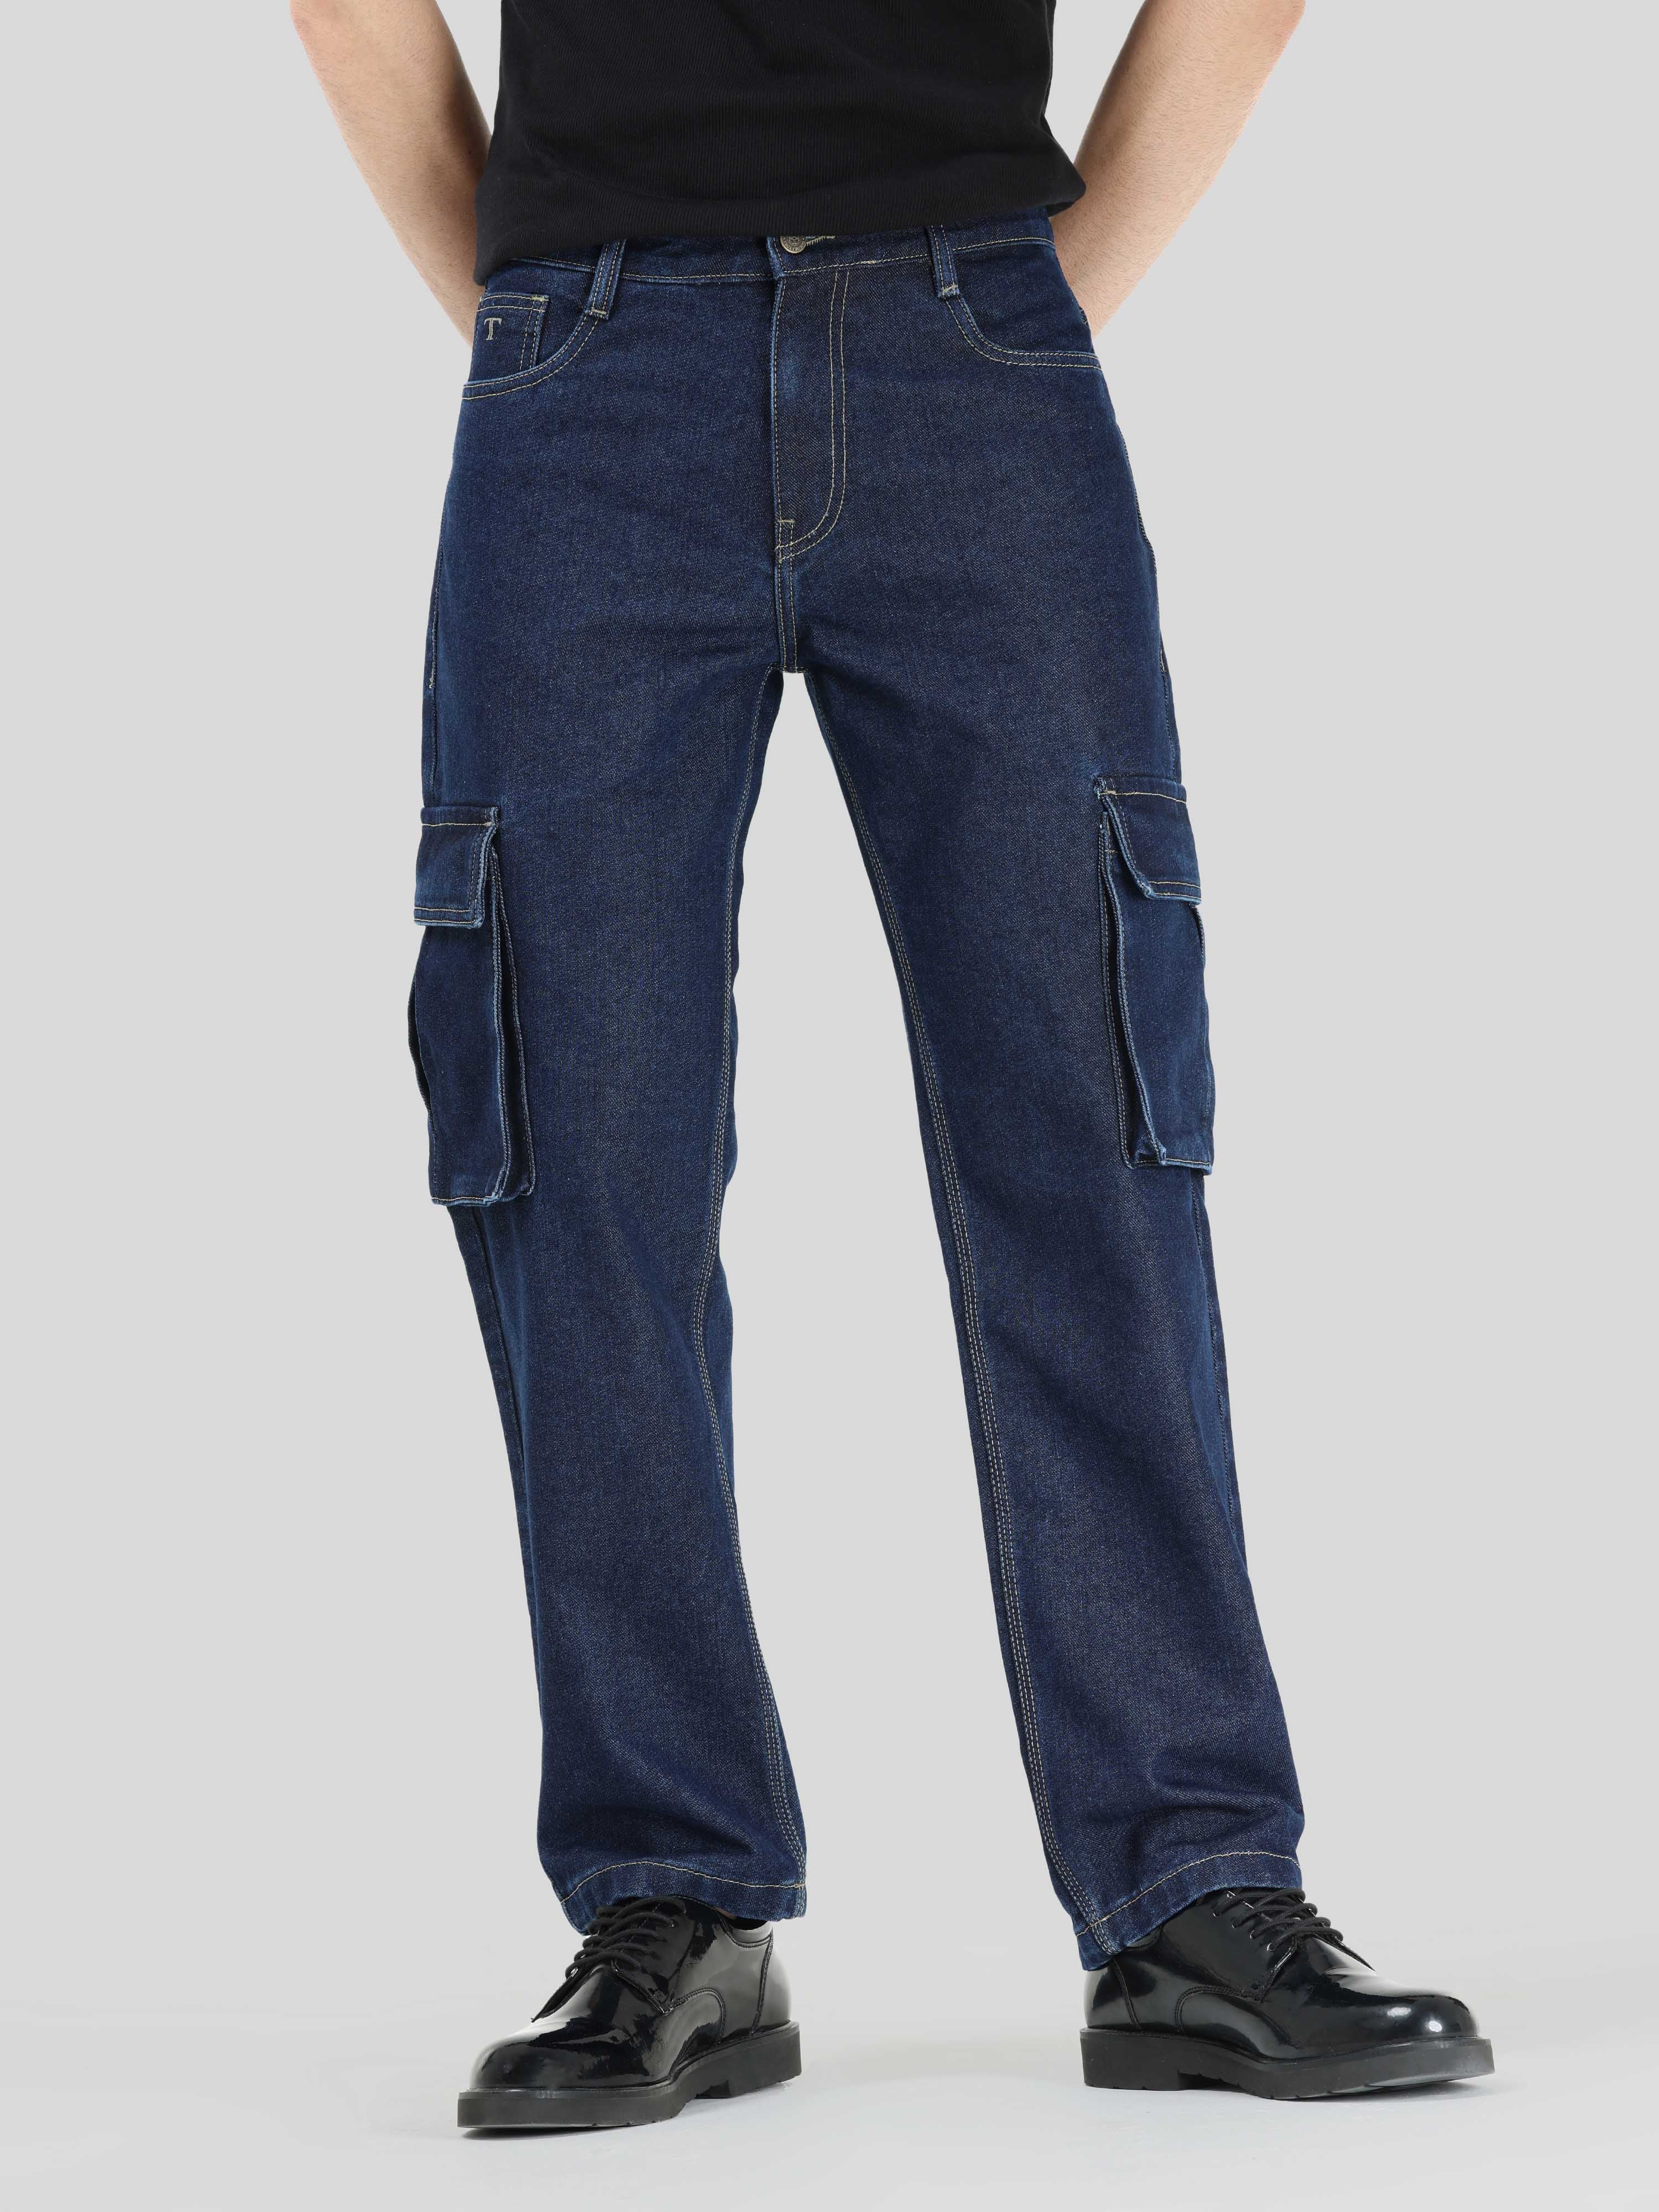 Utility Cargo Pants V4  Cargo pants, Pants, Denim jeans men